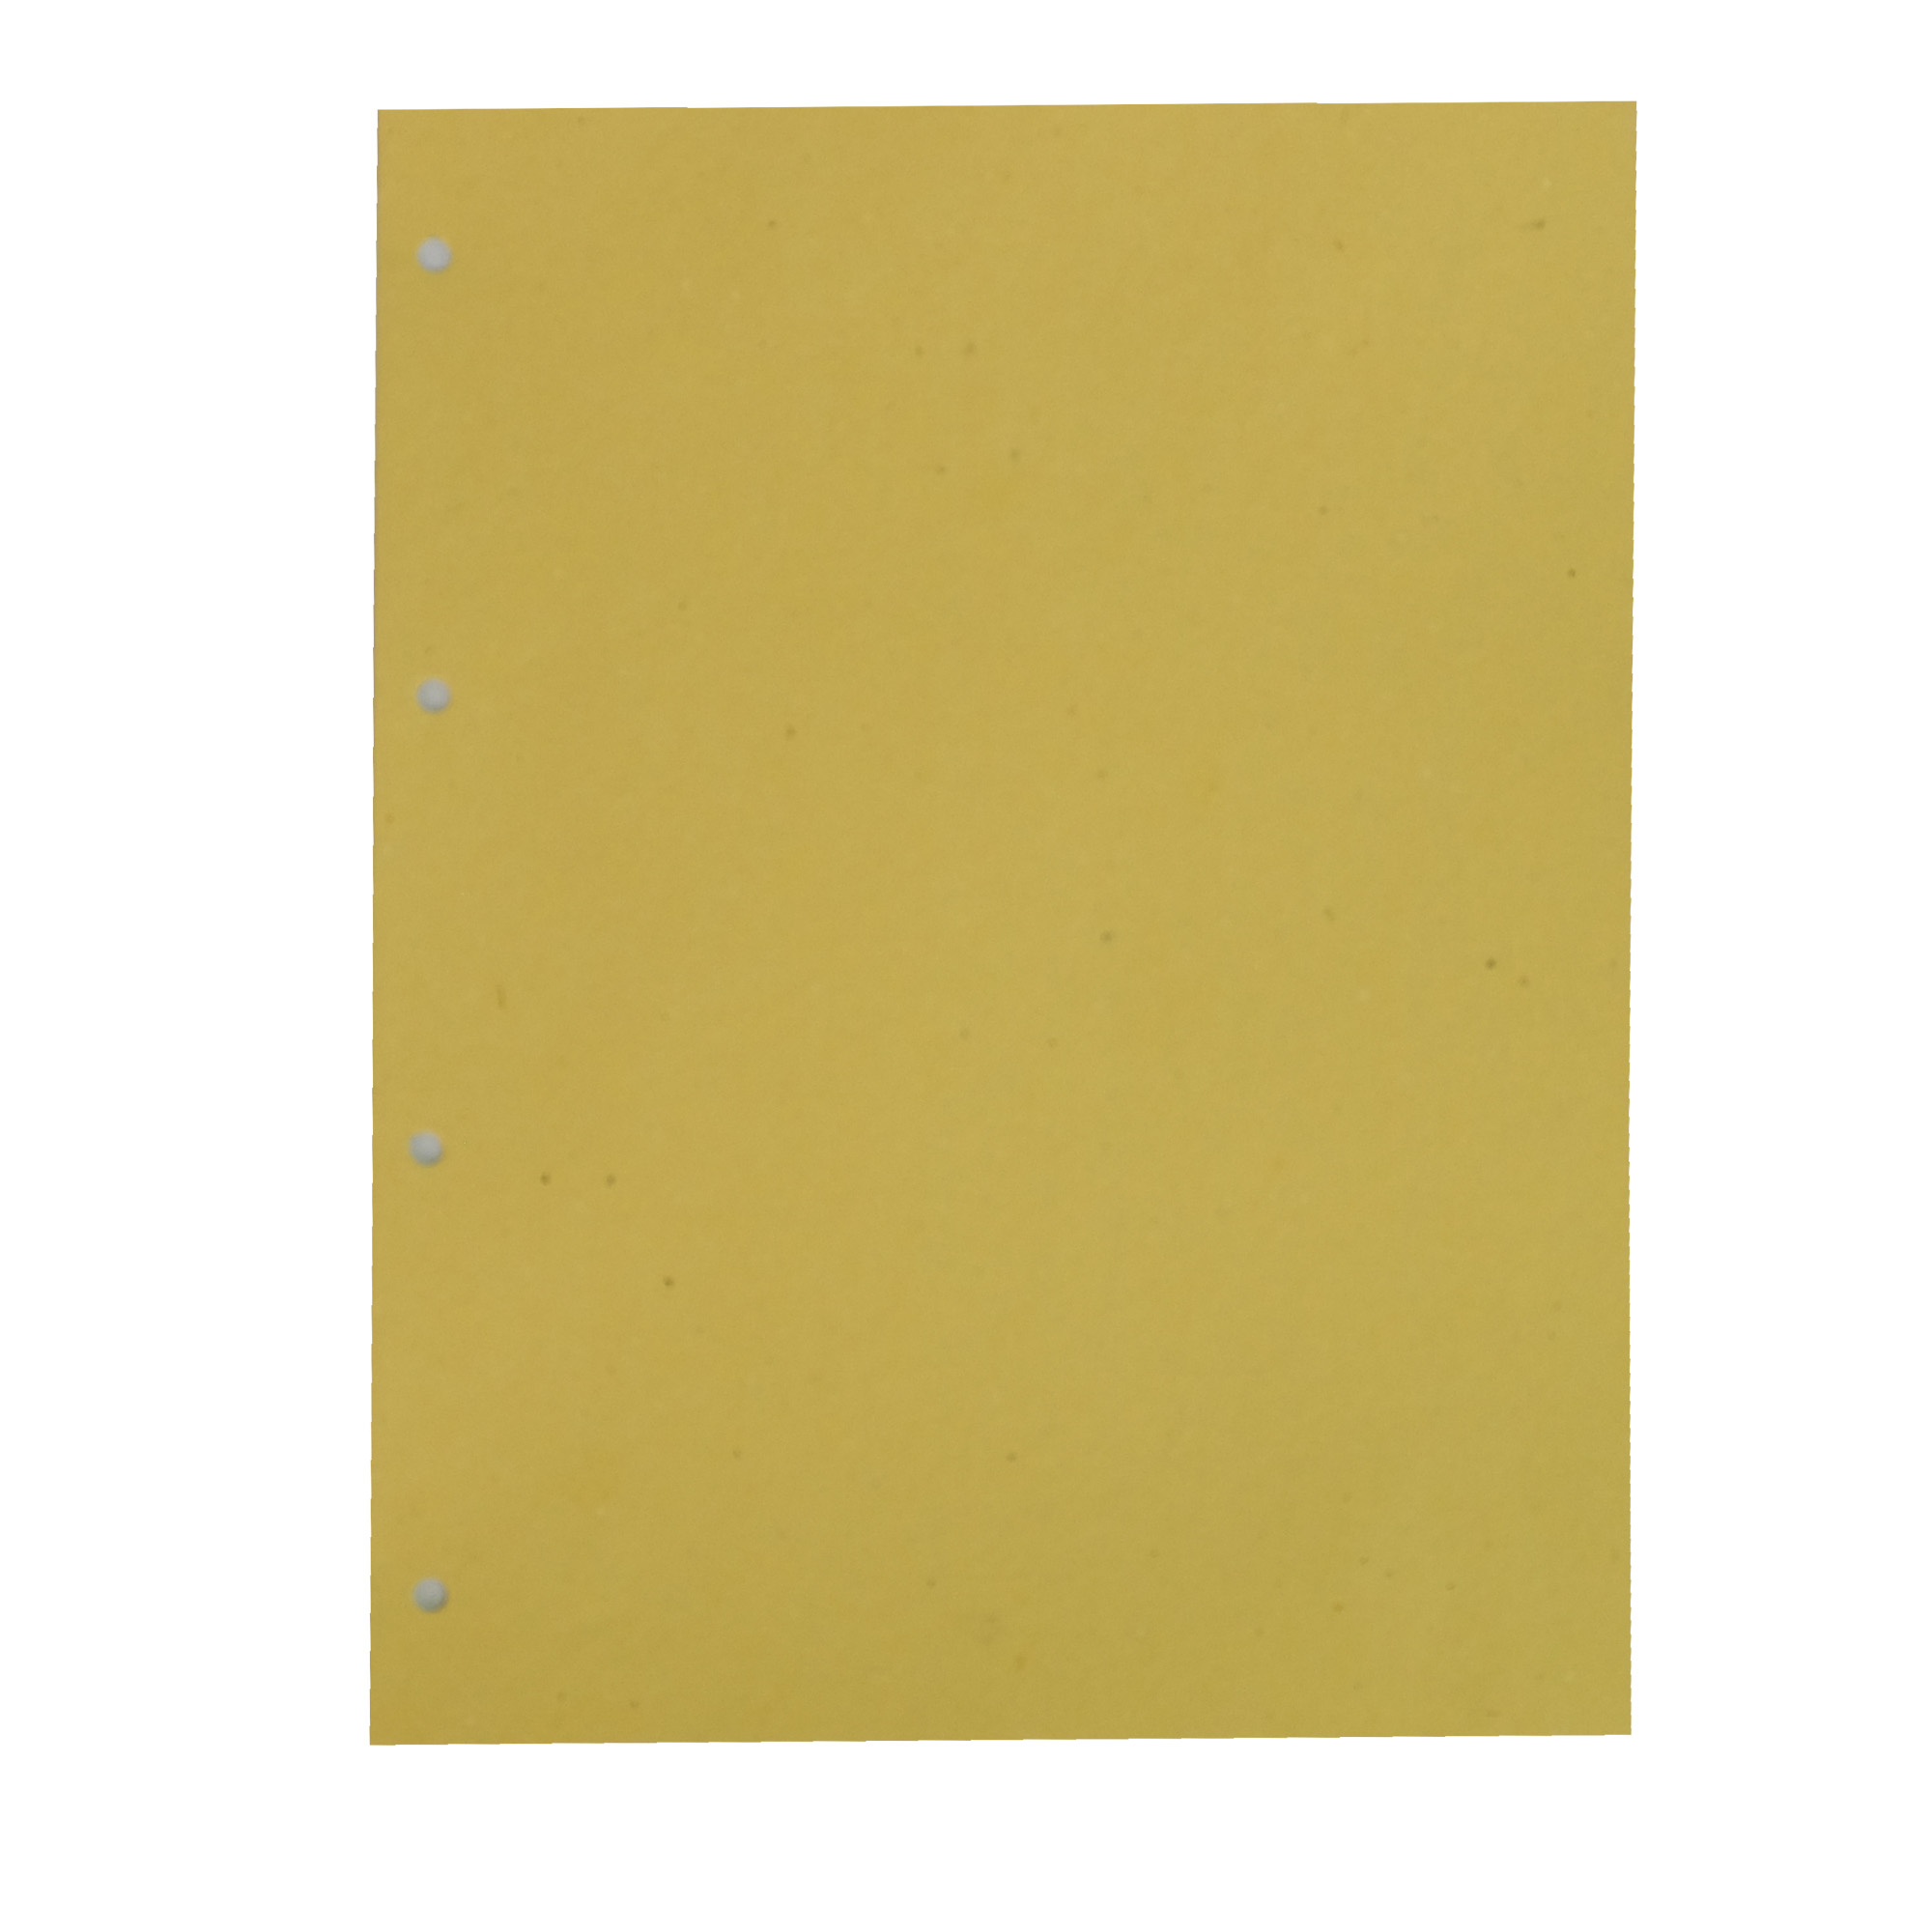 Separatori - cartoncino Manilla 200 gr - 22x30 cm - giallo - Cartotecnica del Garda - conf. 200 pezzi